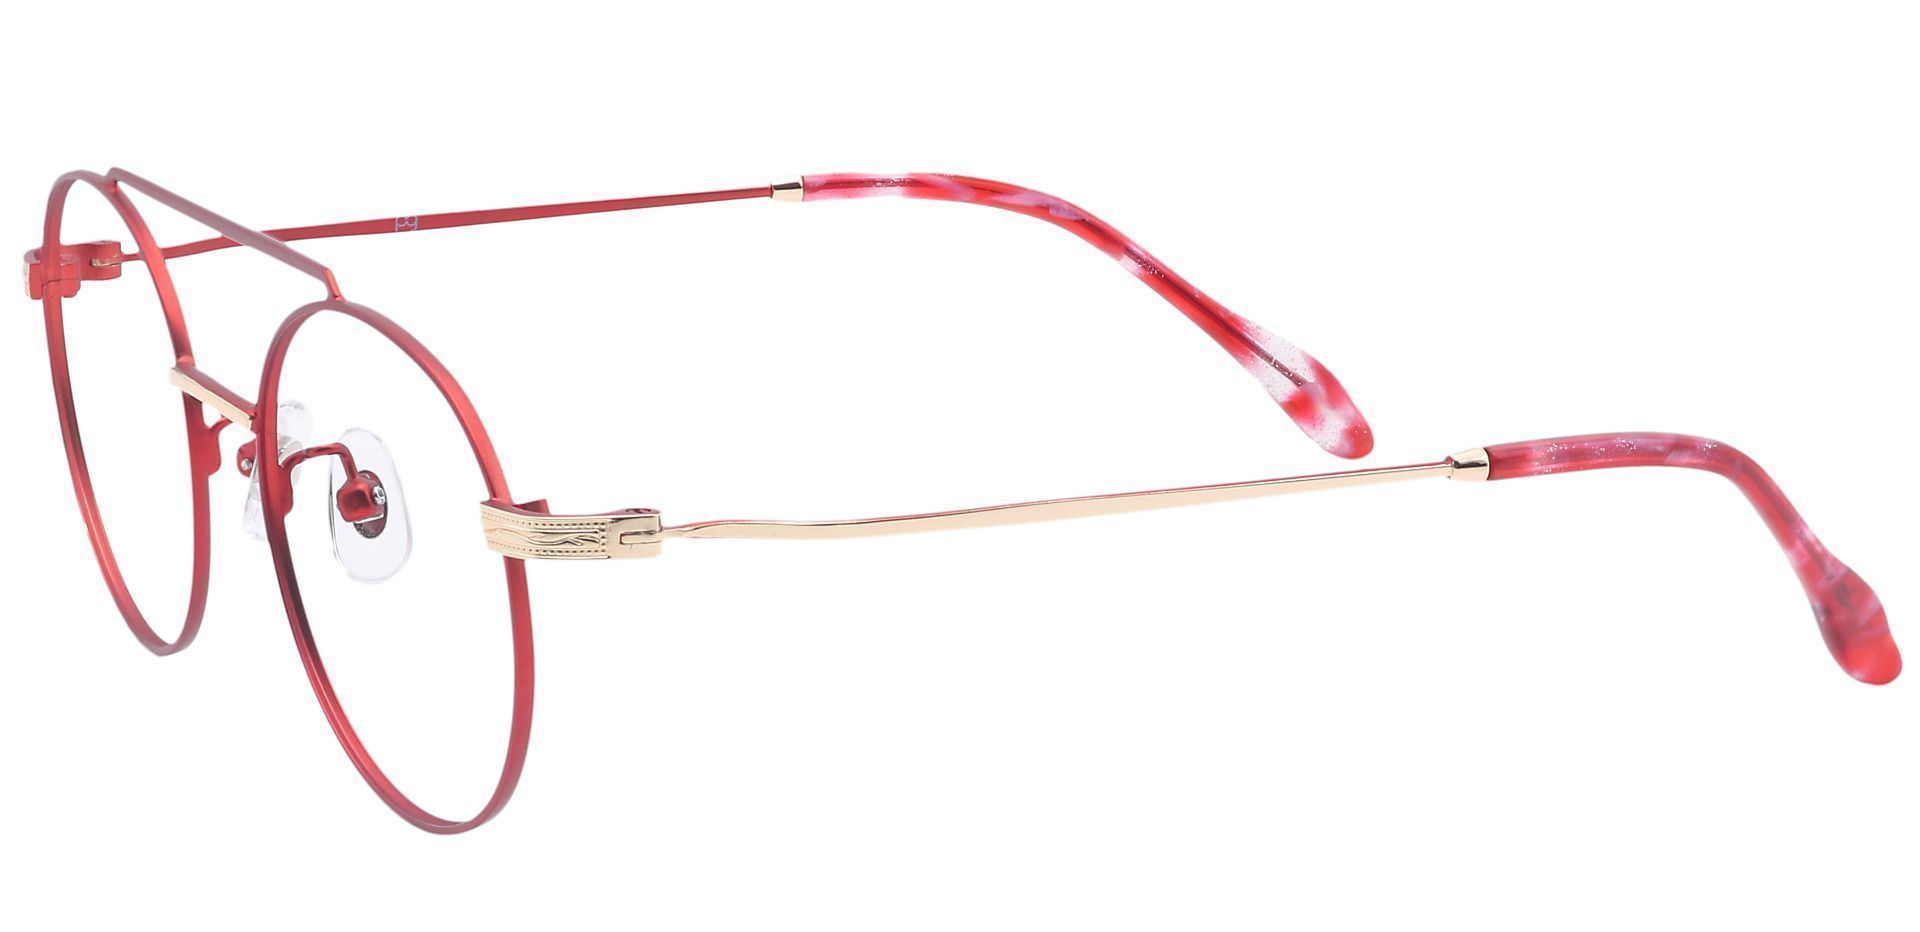 Julia Oval Progressive Glasses - Red